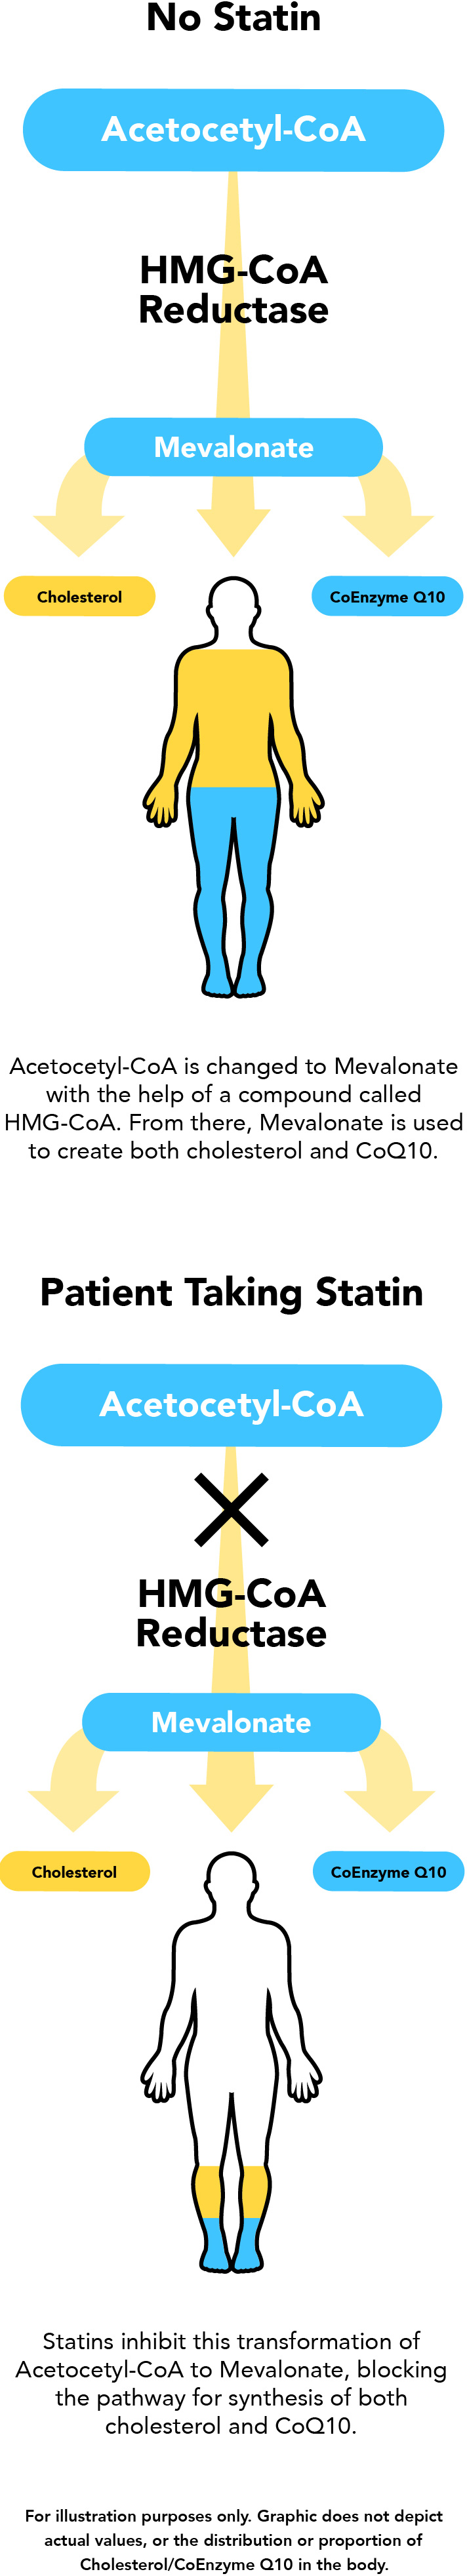 No Statin vs Patient Taking Statin